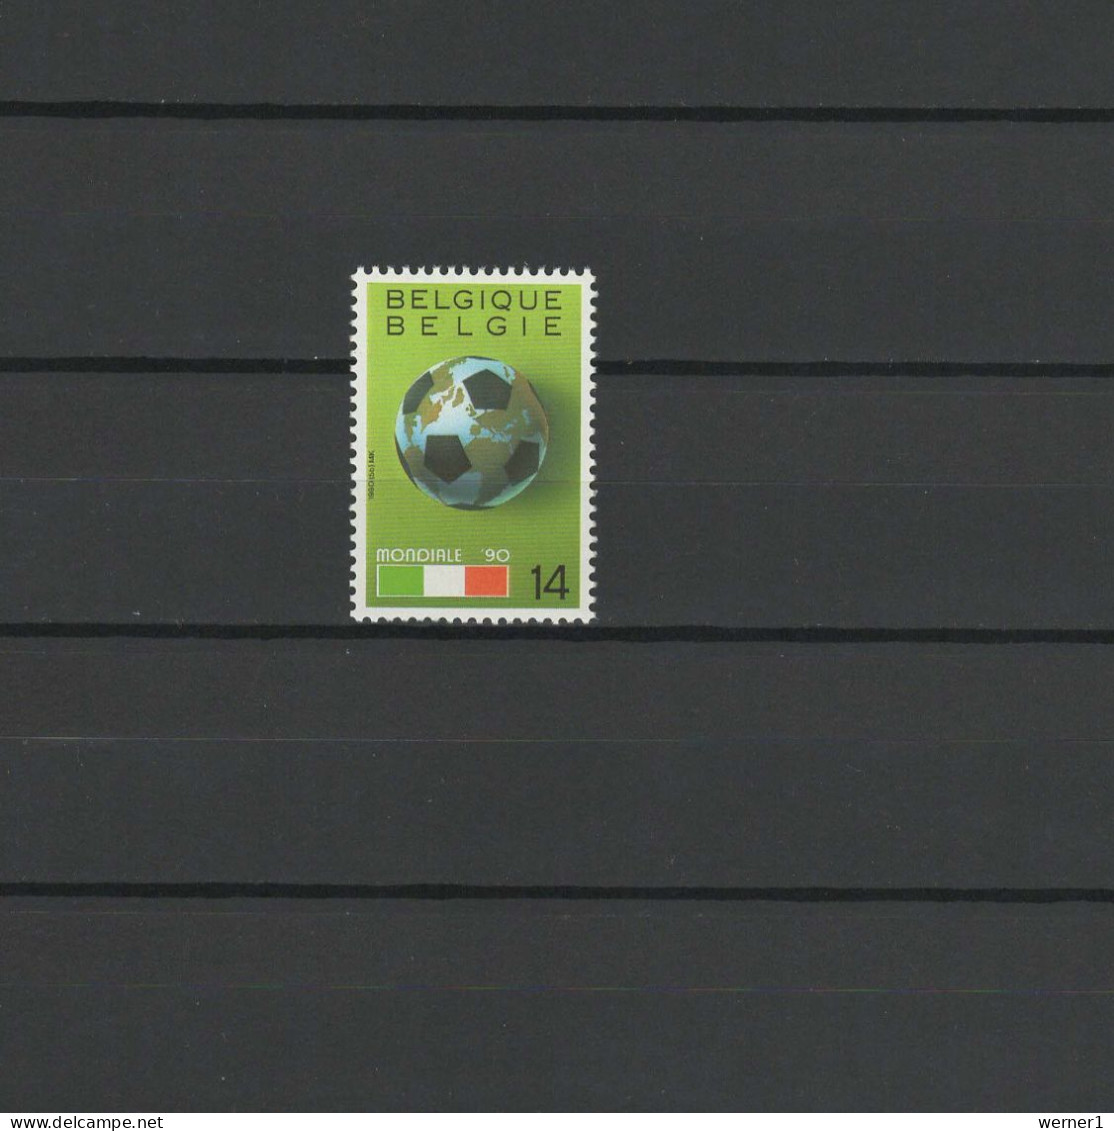 Belgium 1990 Football Soccer World Cup Stamp MNH - 1990 – Italia